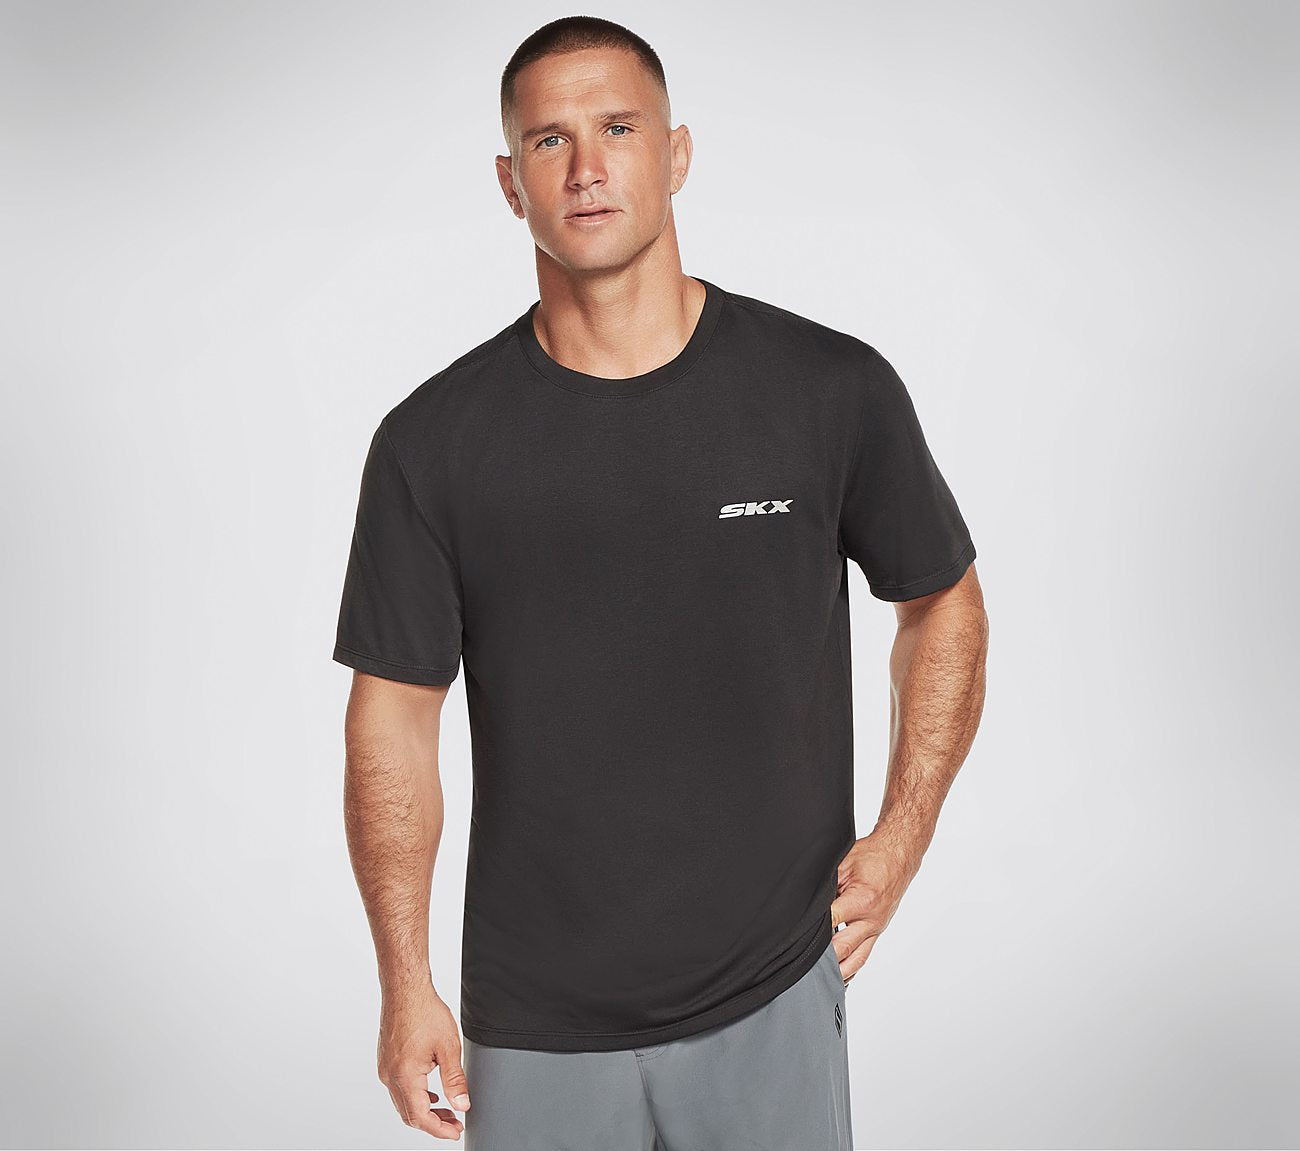 Dri-Release Skx T-Shirt Clothes Skechers